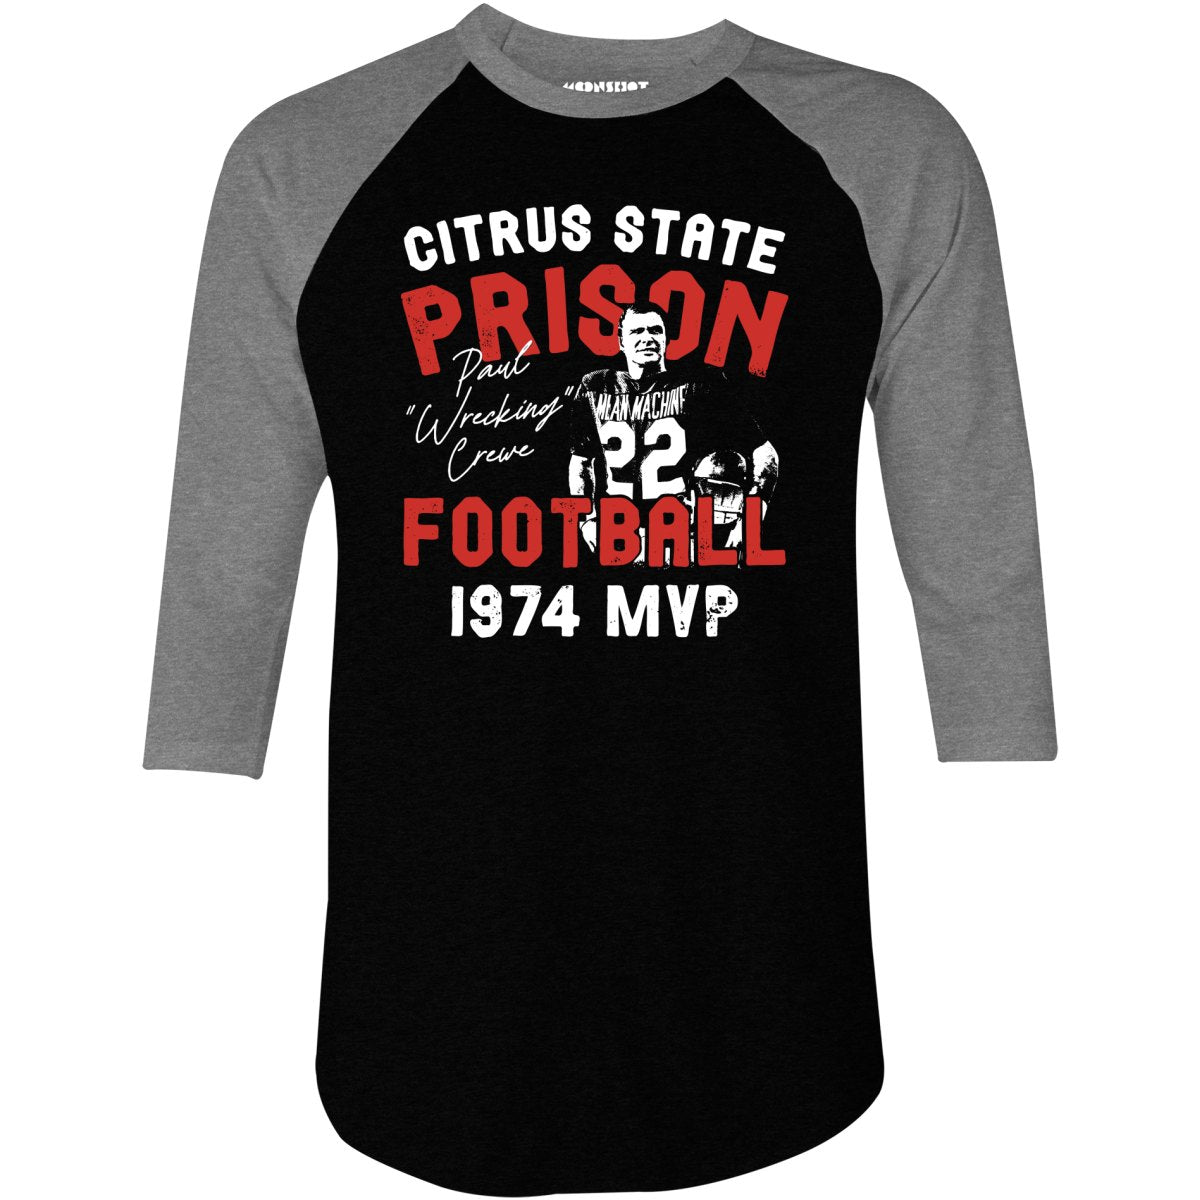 Mean Machine Citrus State Prison Football - 3/4 Sleeve Raglan T-Shirt